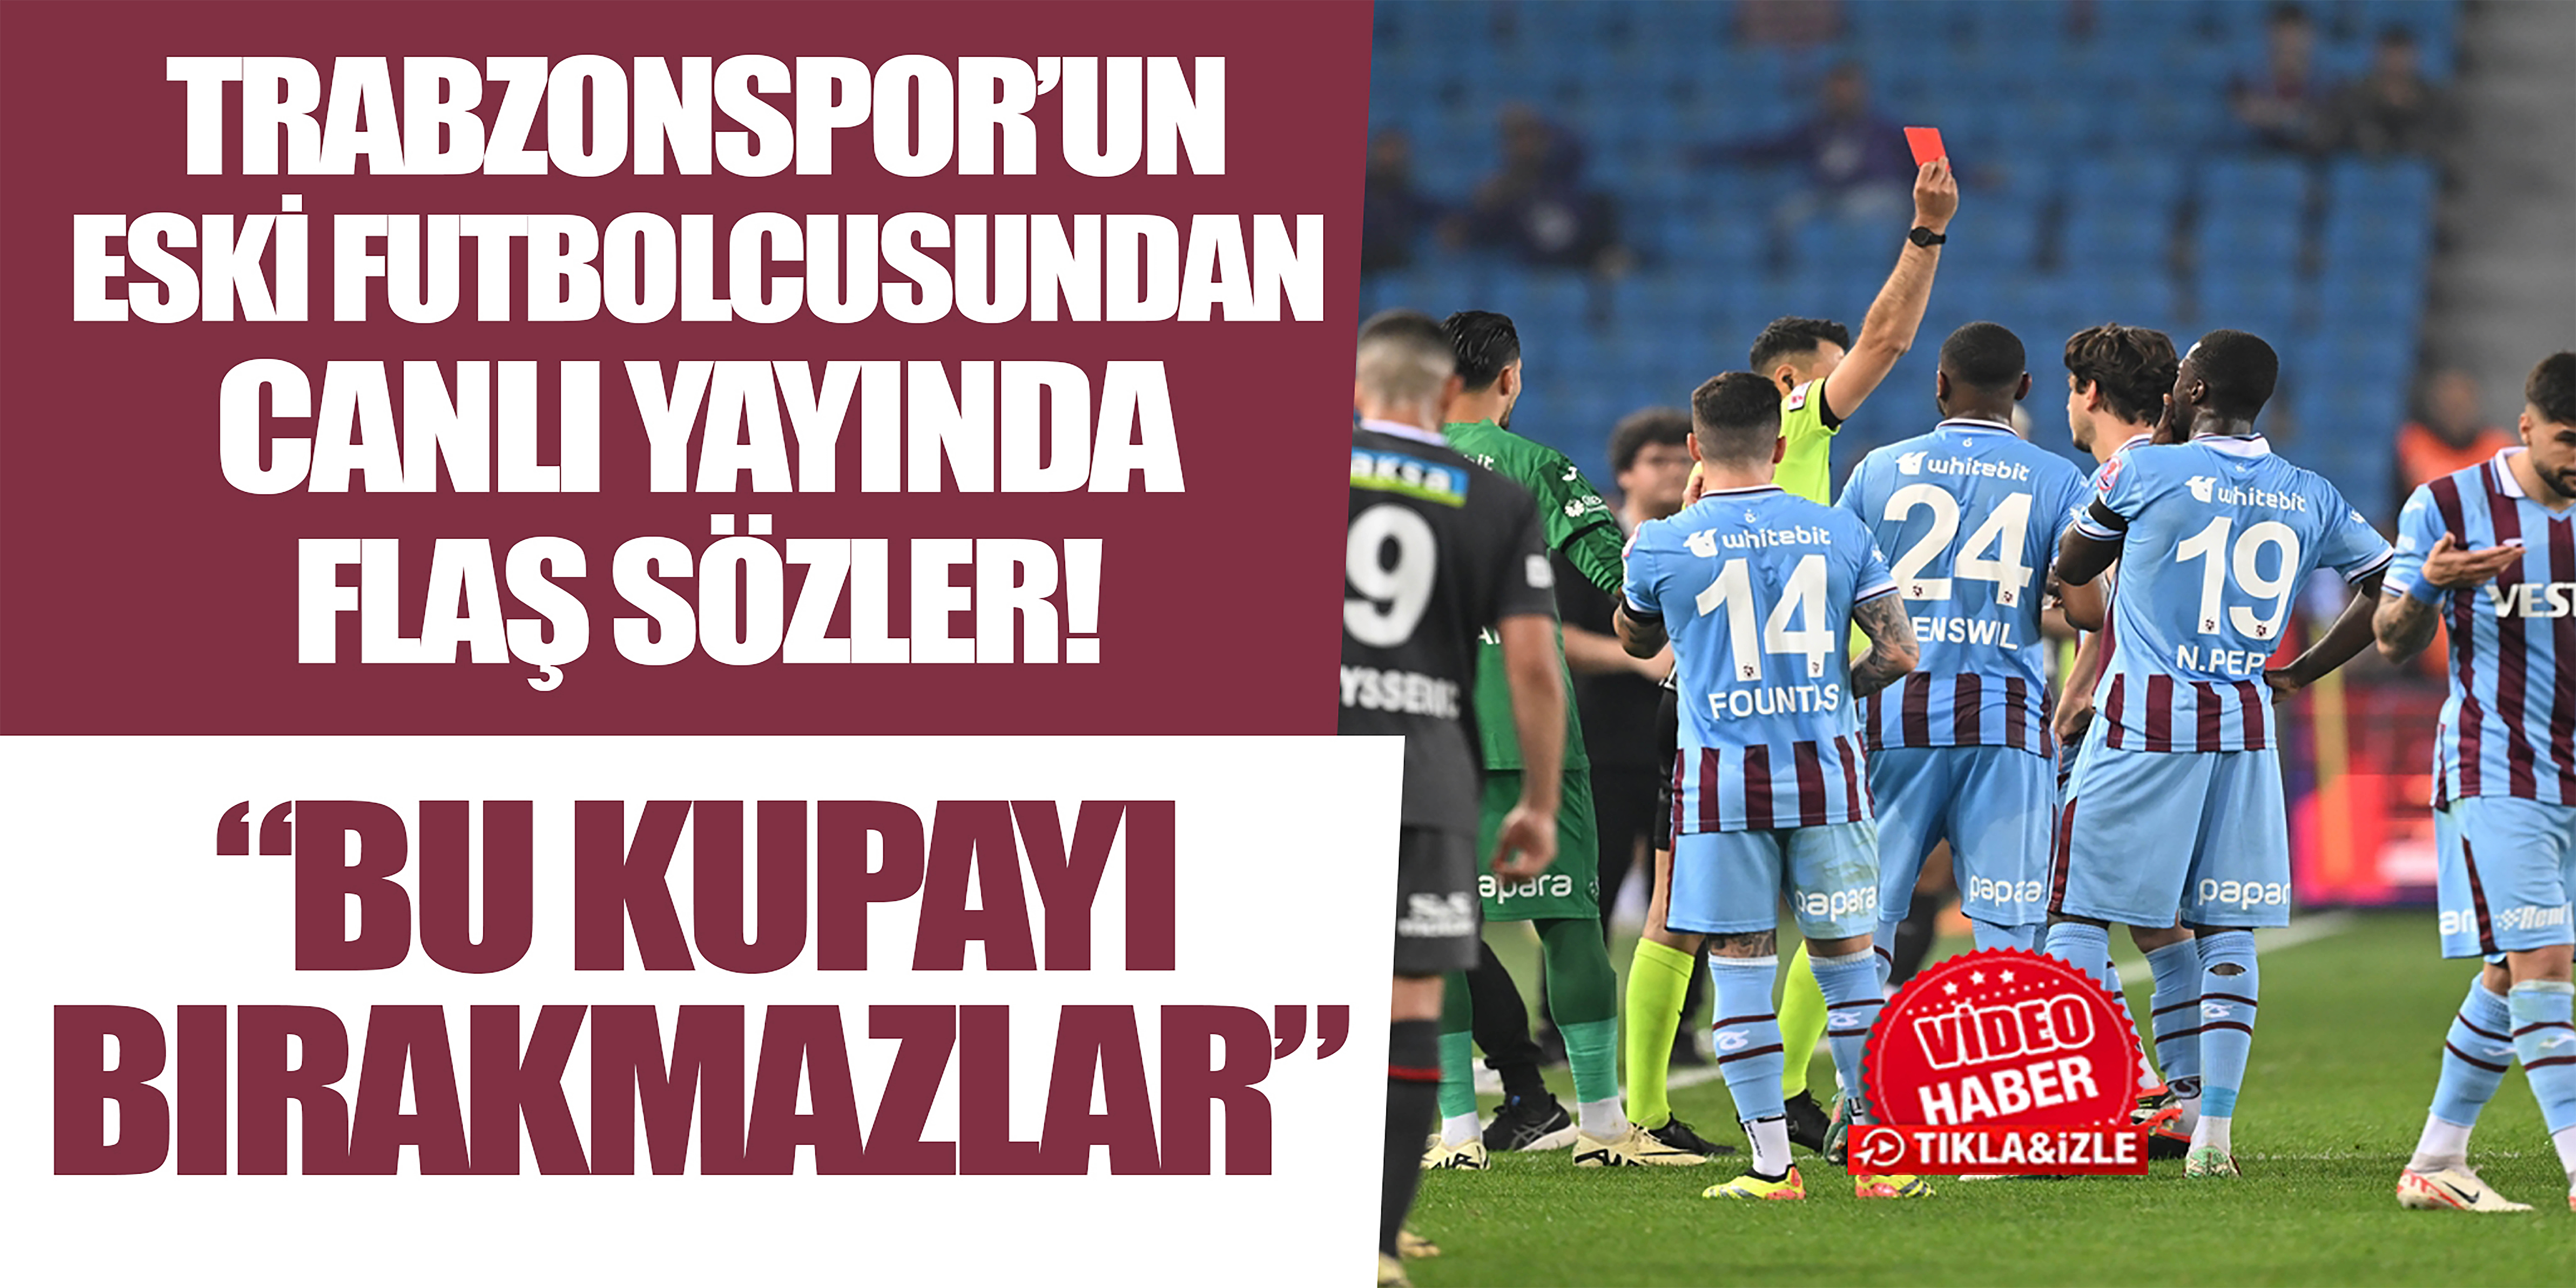 Trabzonspor'un eski futbolcusundan flaş sözler! "Bu kupayı kolay kolay bırakmazlar"